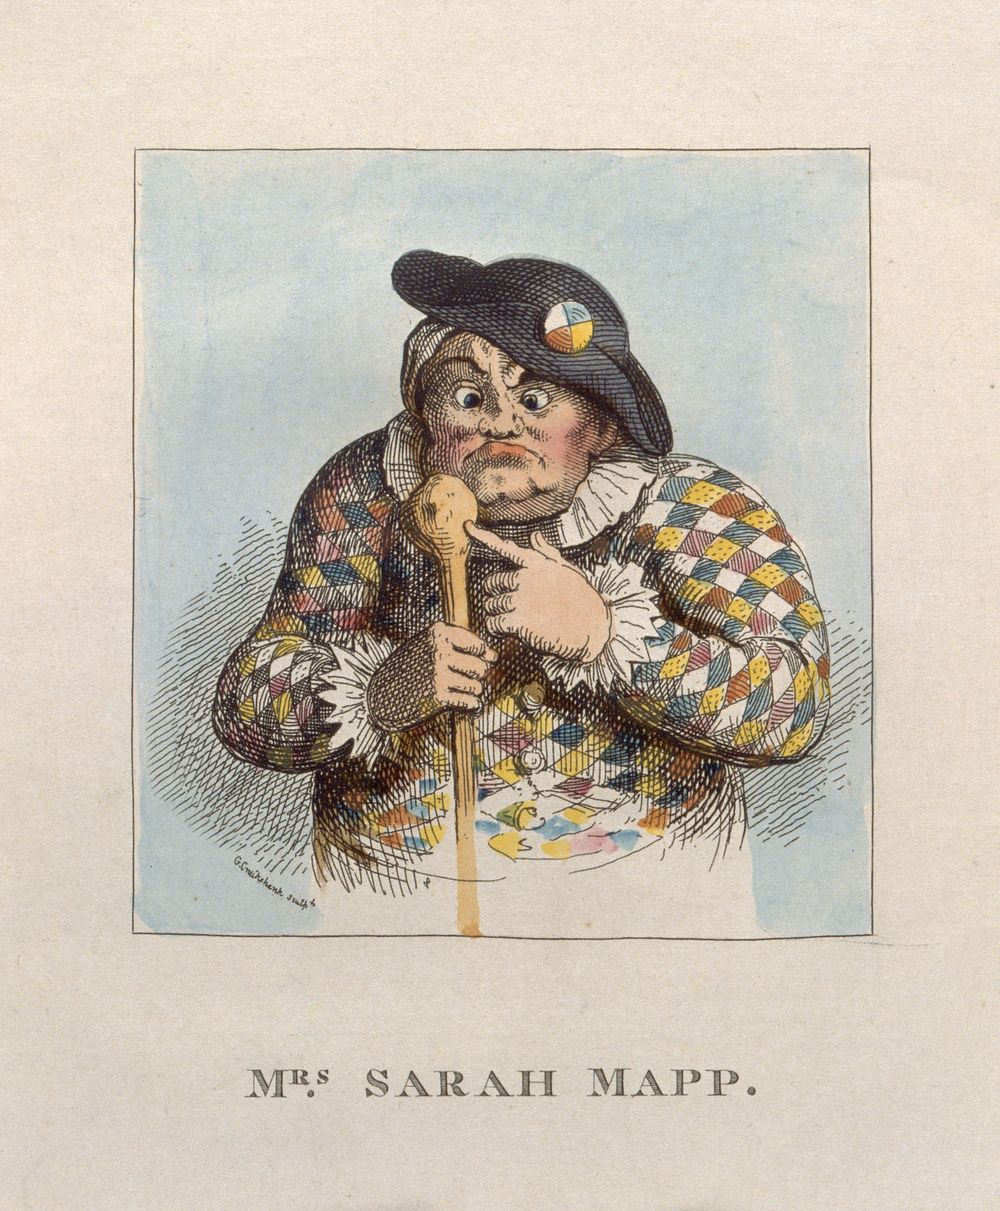 Sarah Mapp. Coloured etching by G. Cruikshank, 1819, after W. Hogarth.